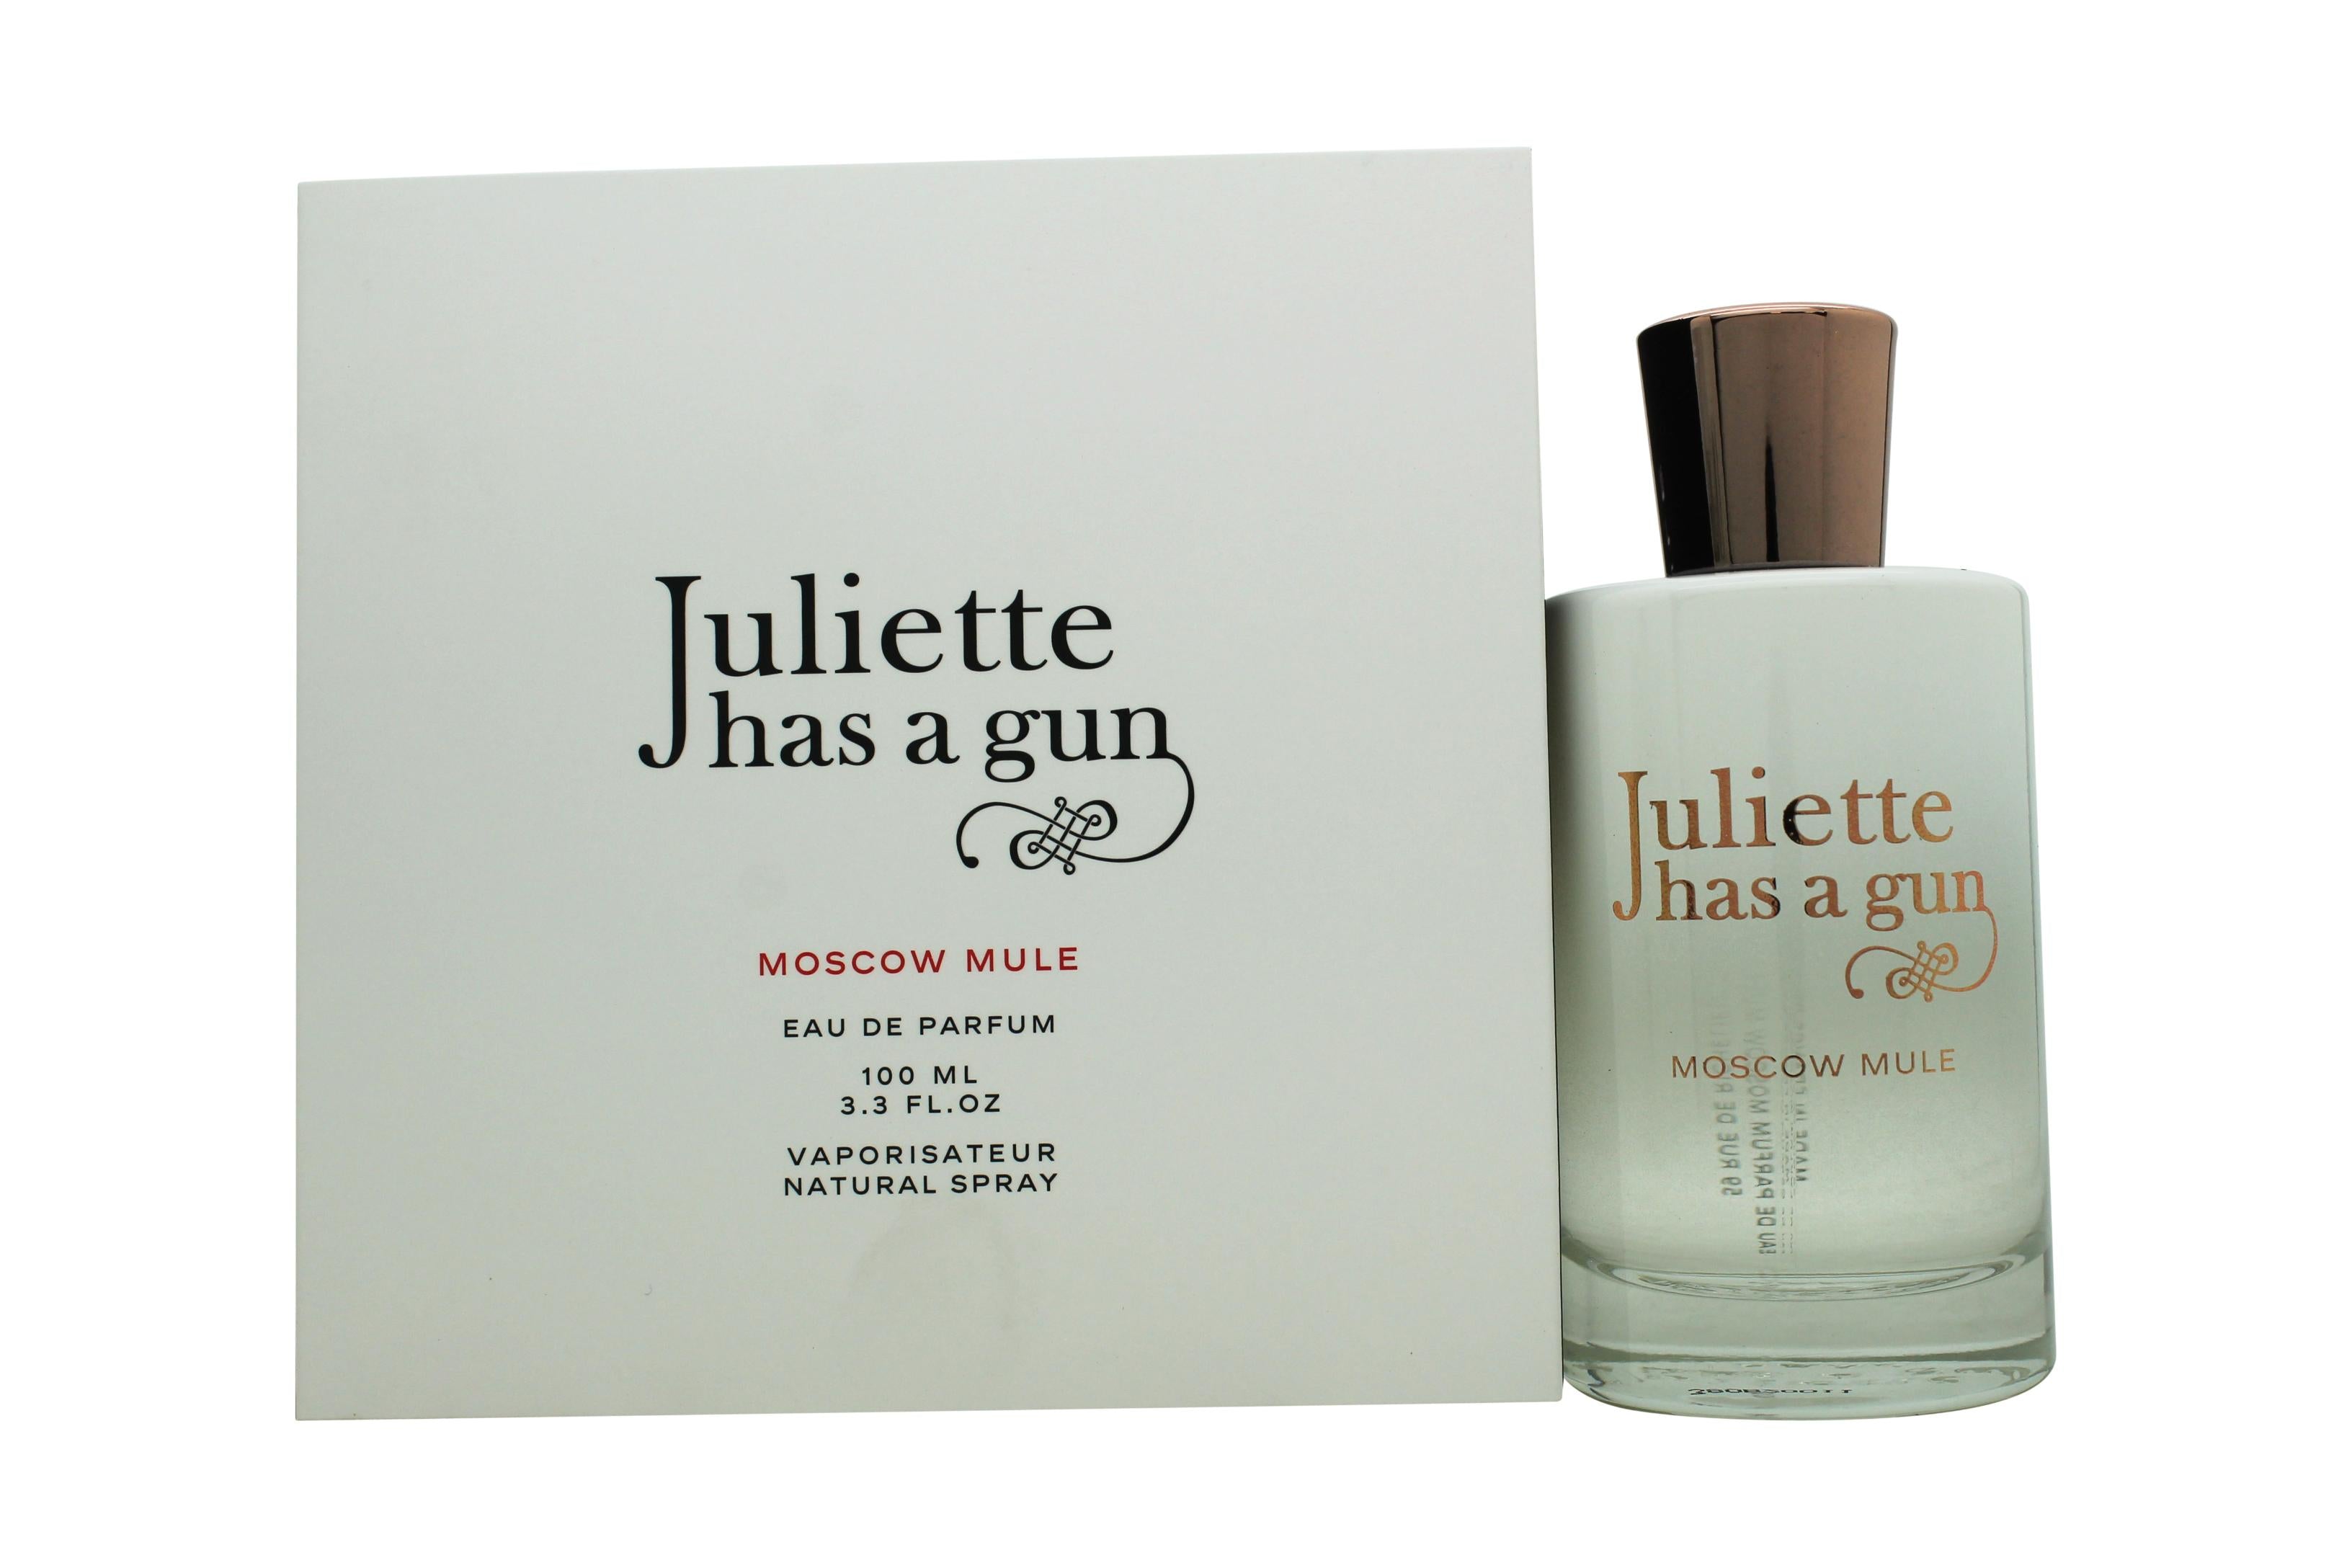 View Juliette Has A Gun Moscow Mule Eau de Parfum 100ml Spray information